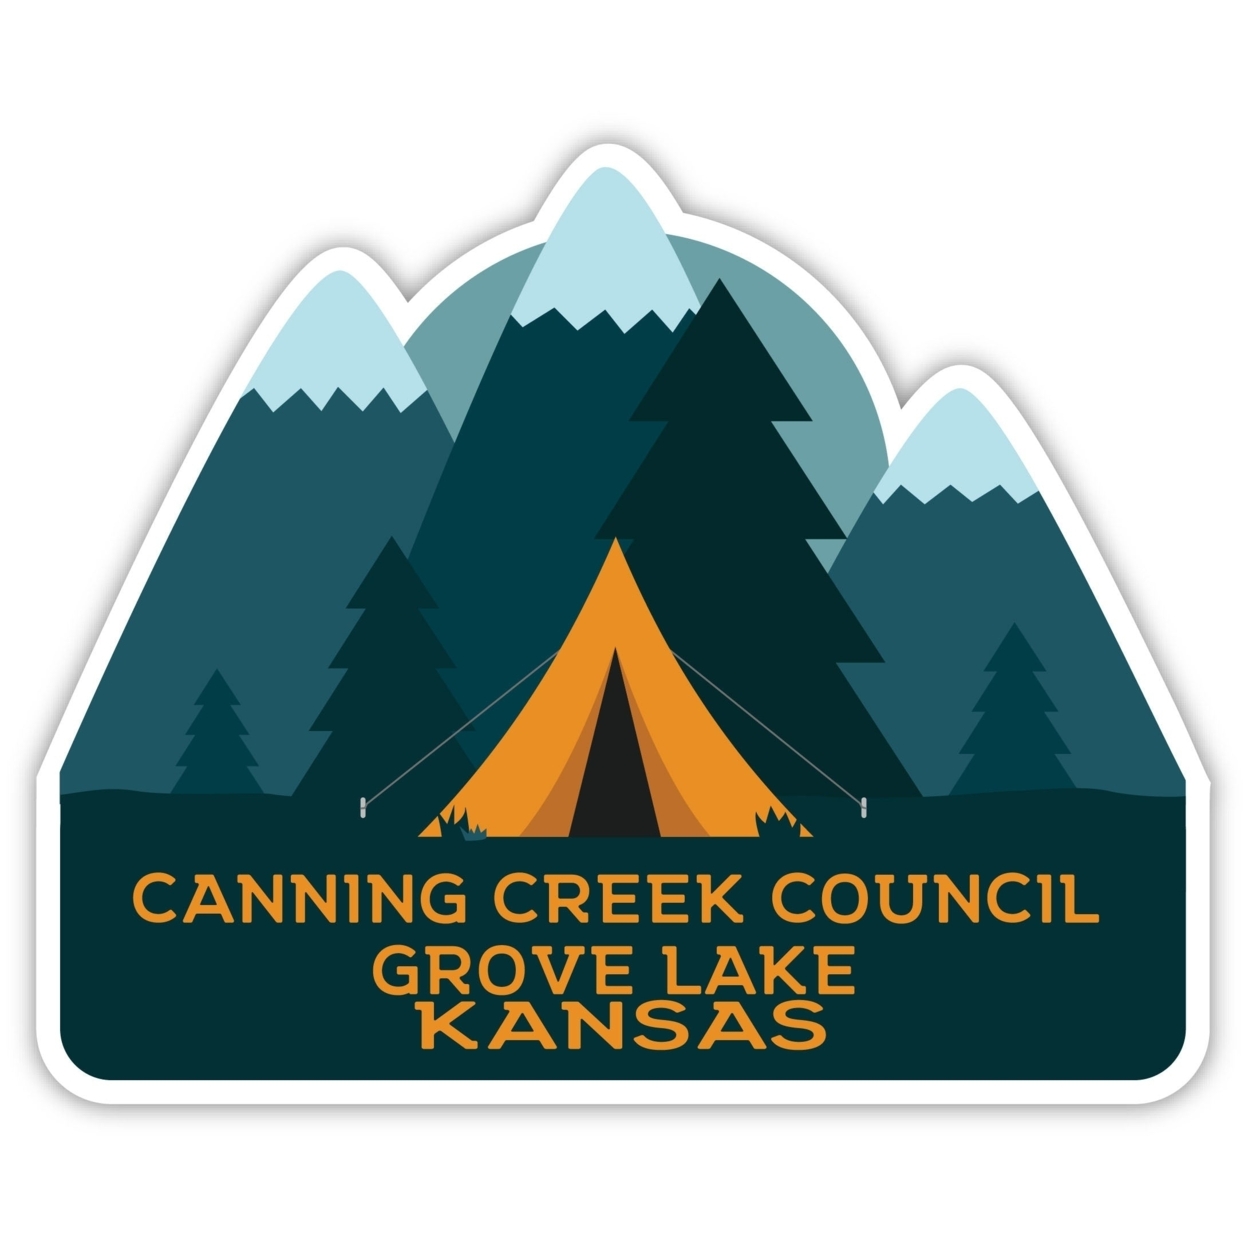 Canning Creek Council Grove Lake Kansas Souvenir Decorative Stickers (Choose Theme And Size) - Single Unit, 12-Inch, Tent